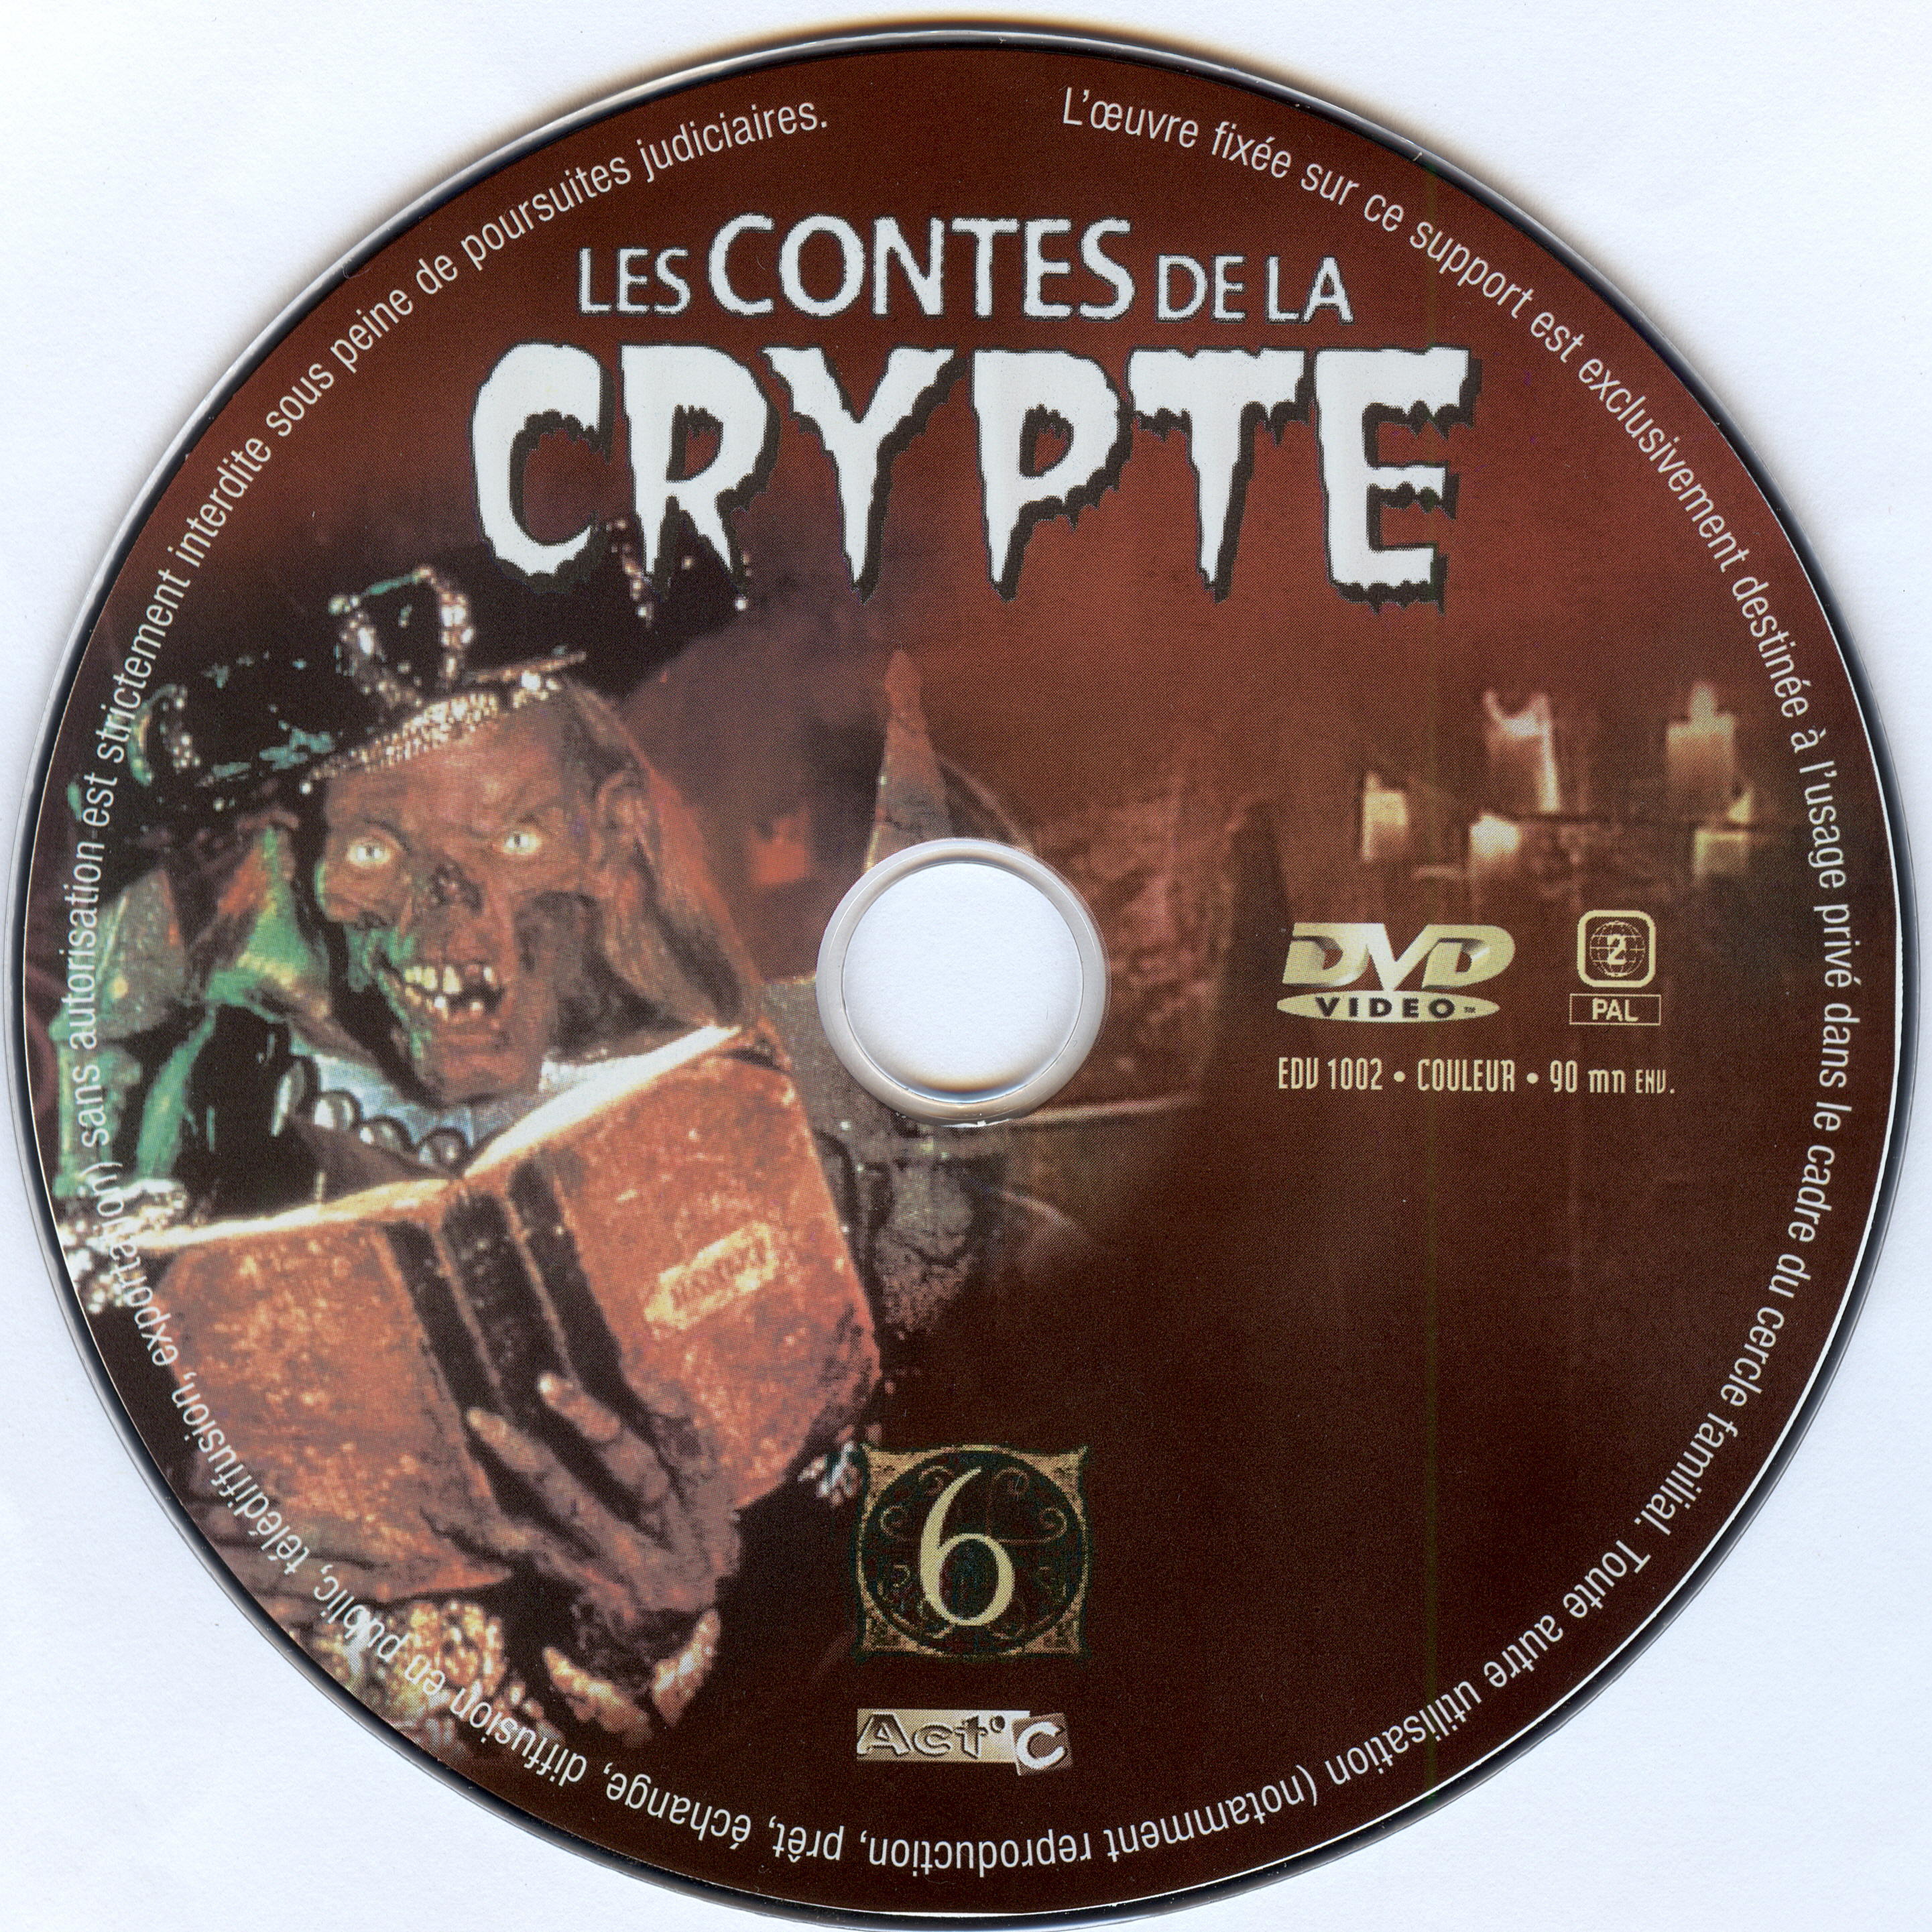 Les contes de la crypte vol 06